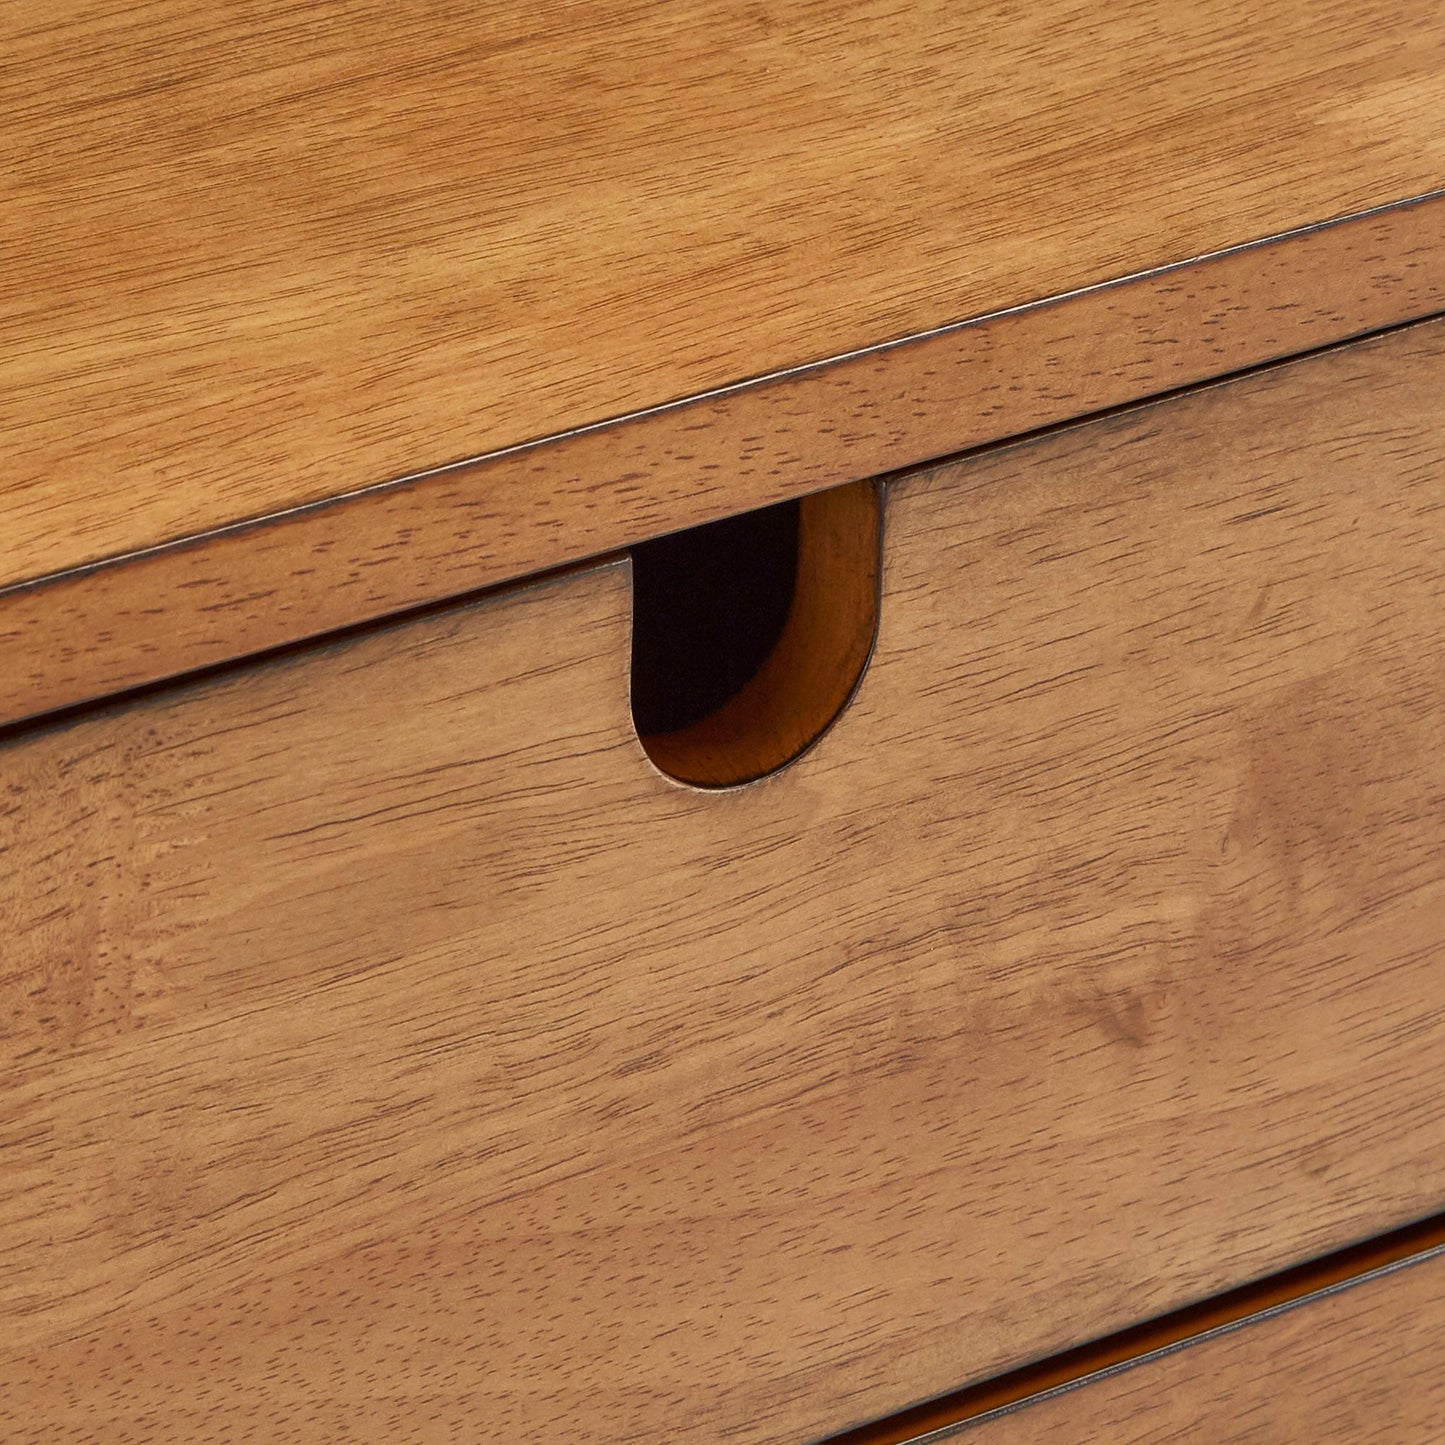 Oak Finish 3-Drawer Dresser